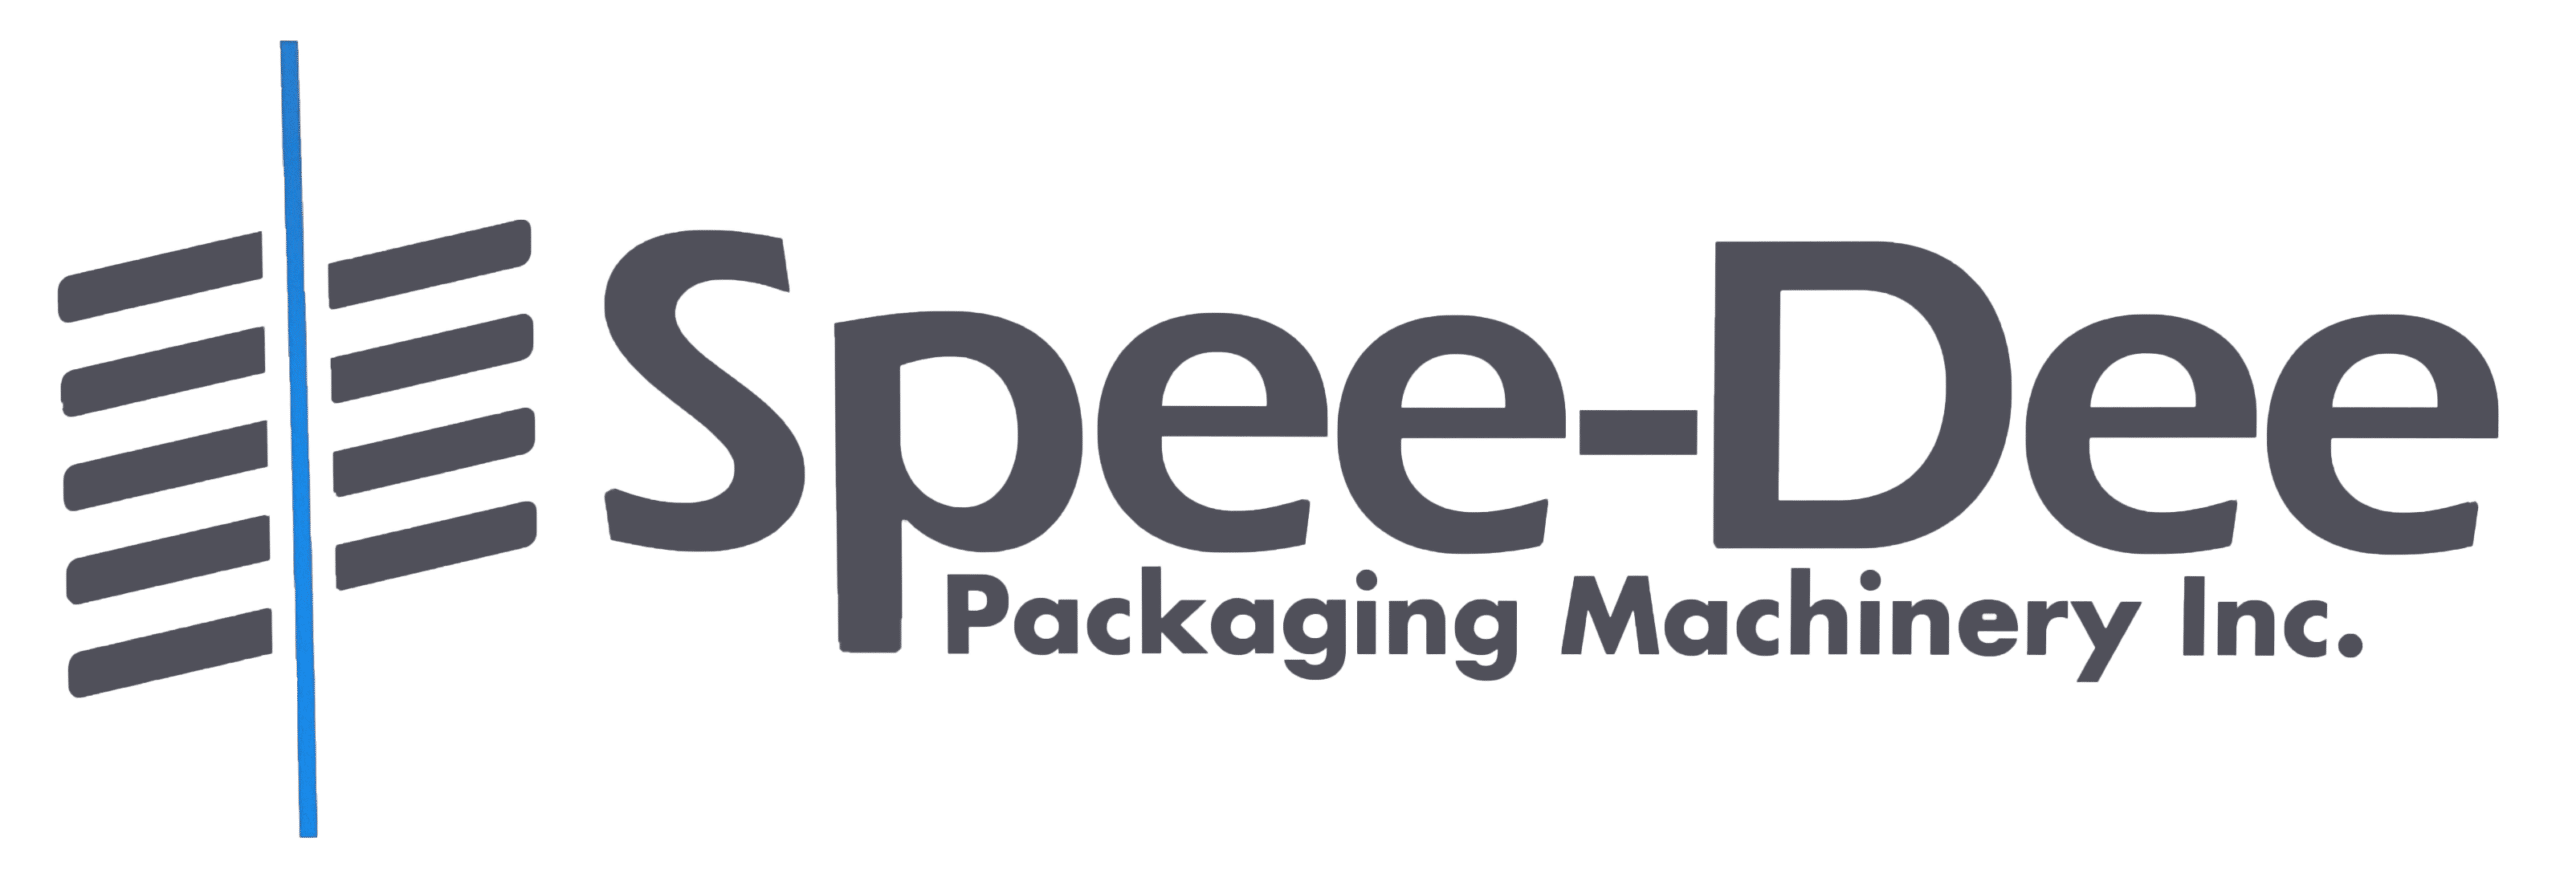 Spee-Dee Packaging LOGO